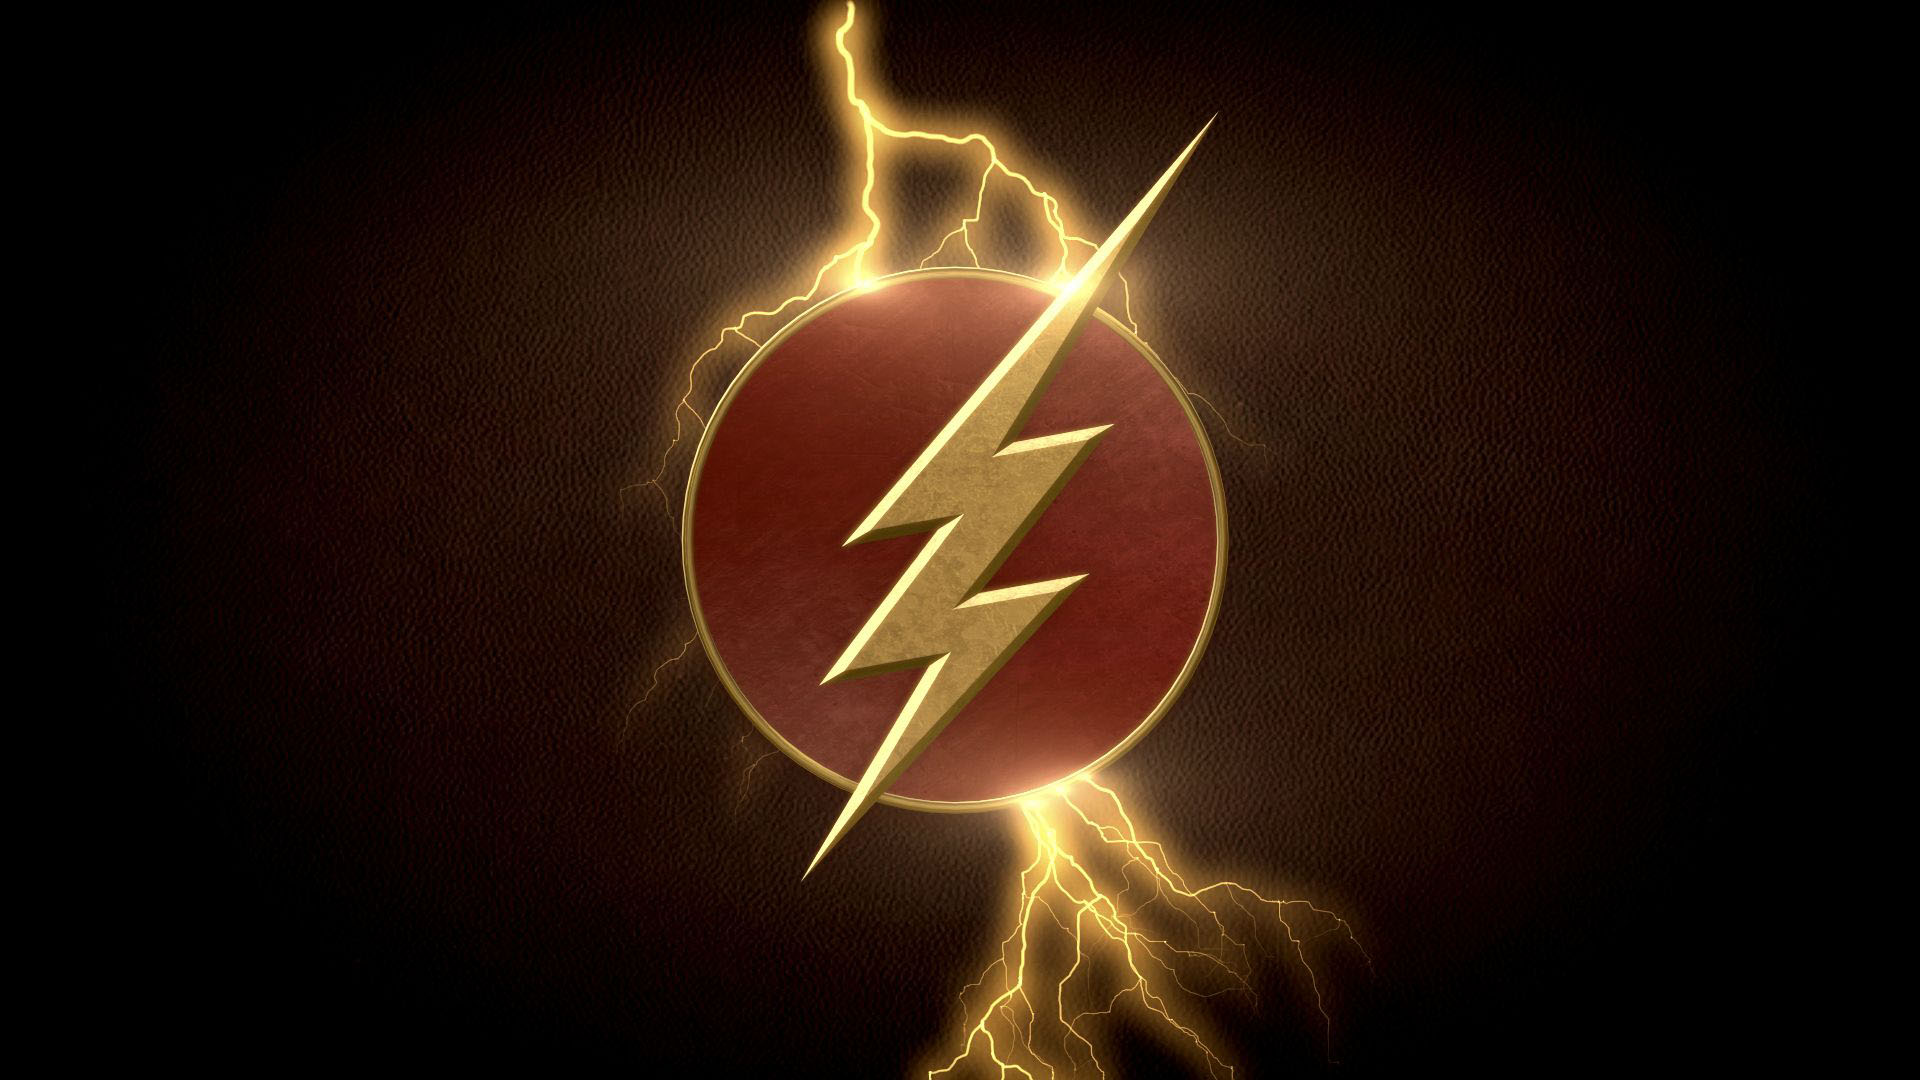 The flash symbol wallpaper